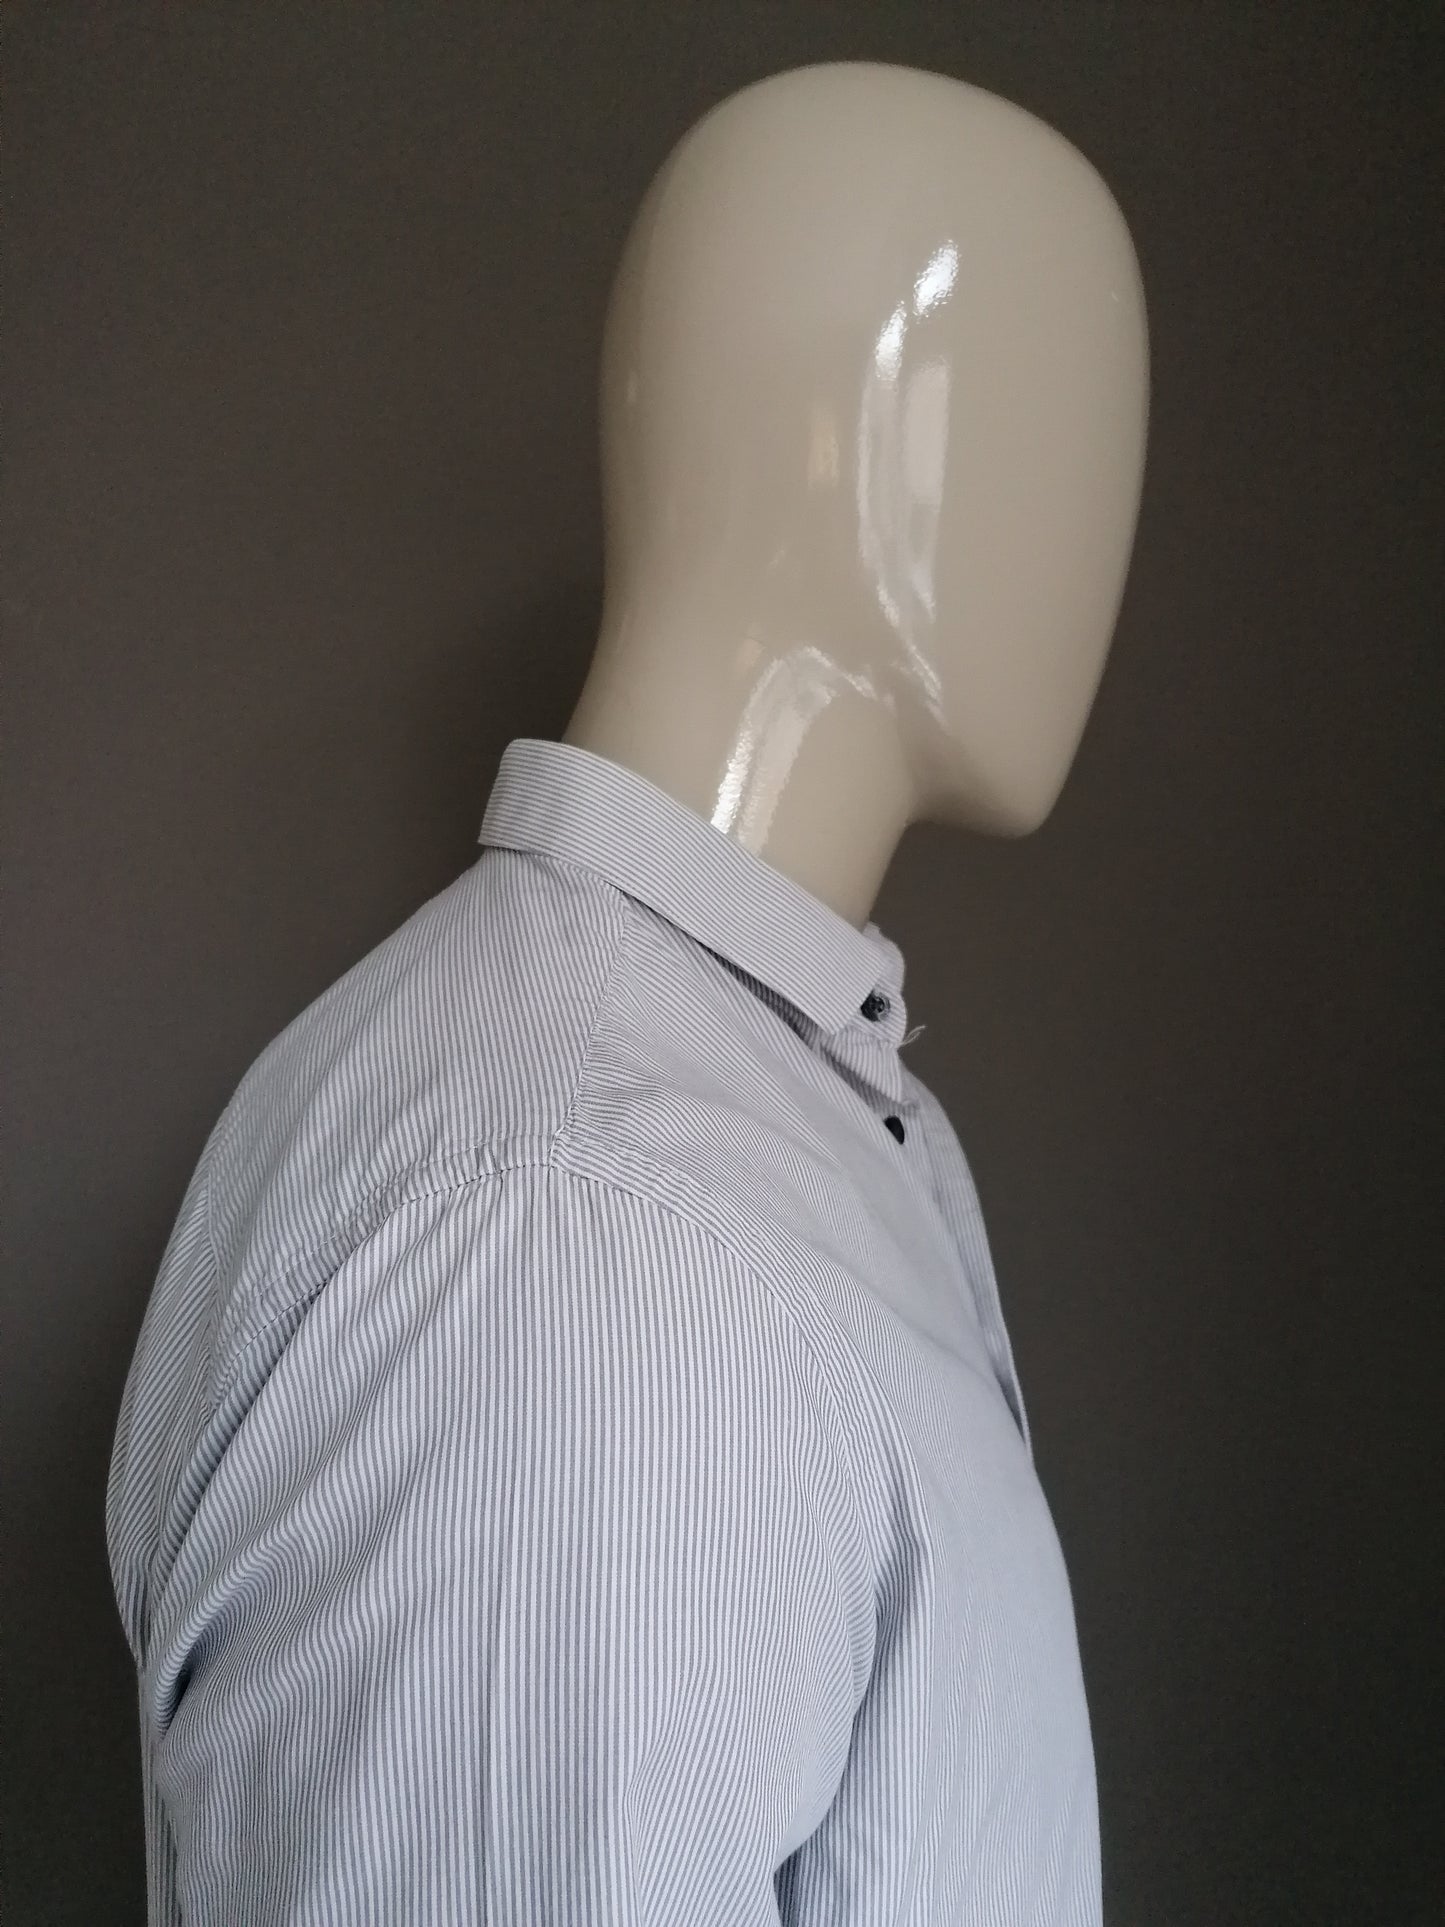 Devred Shirt. Gray white striped. Size L. Limited Edition